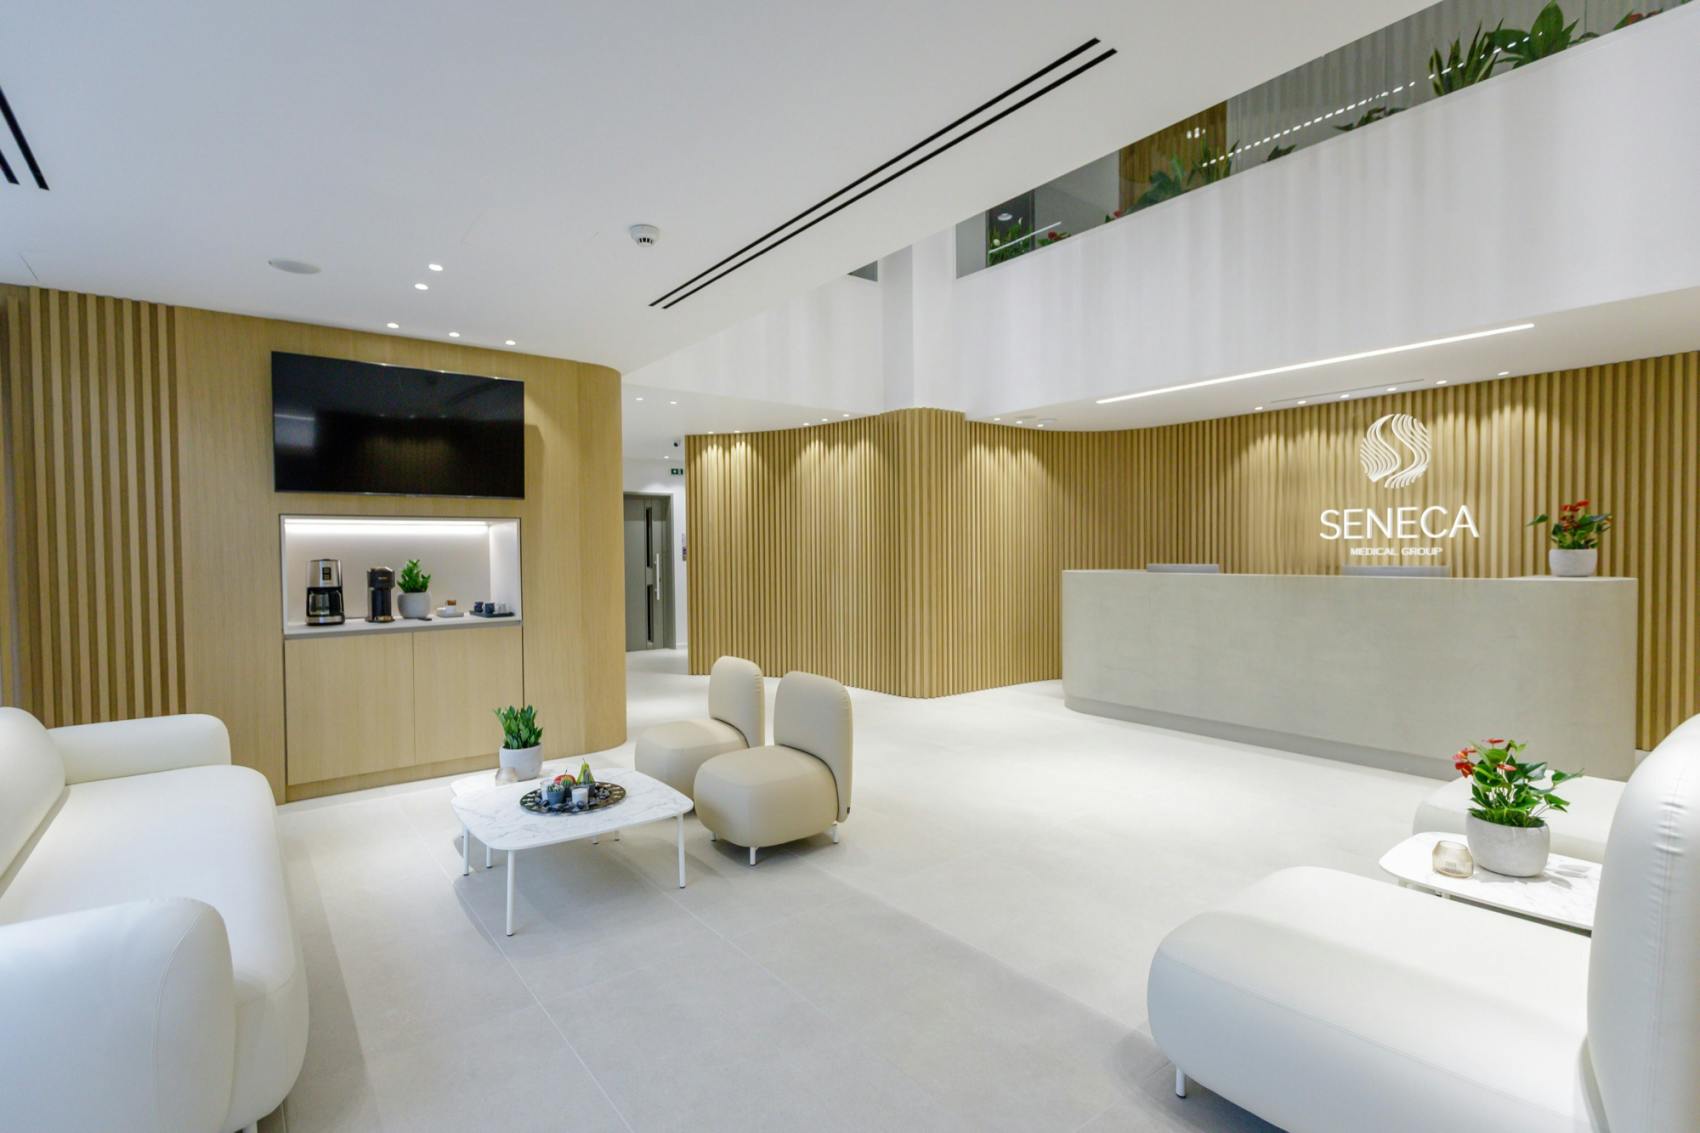 Seneca Medical Group Athens